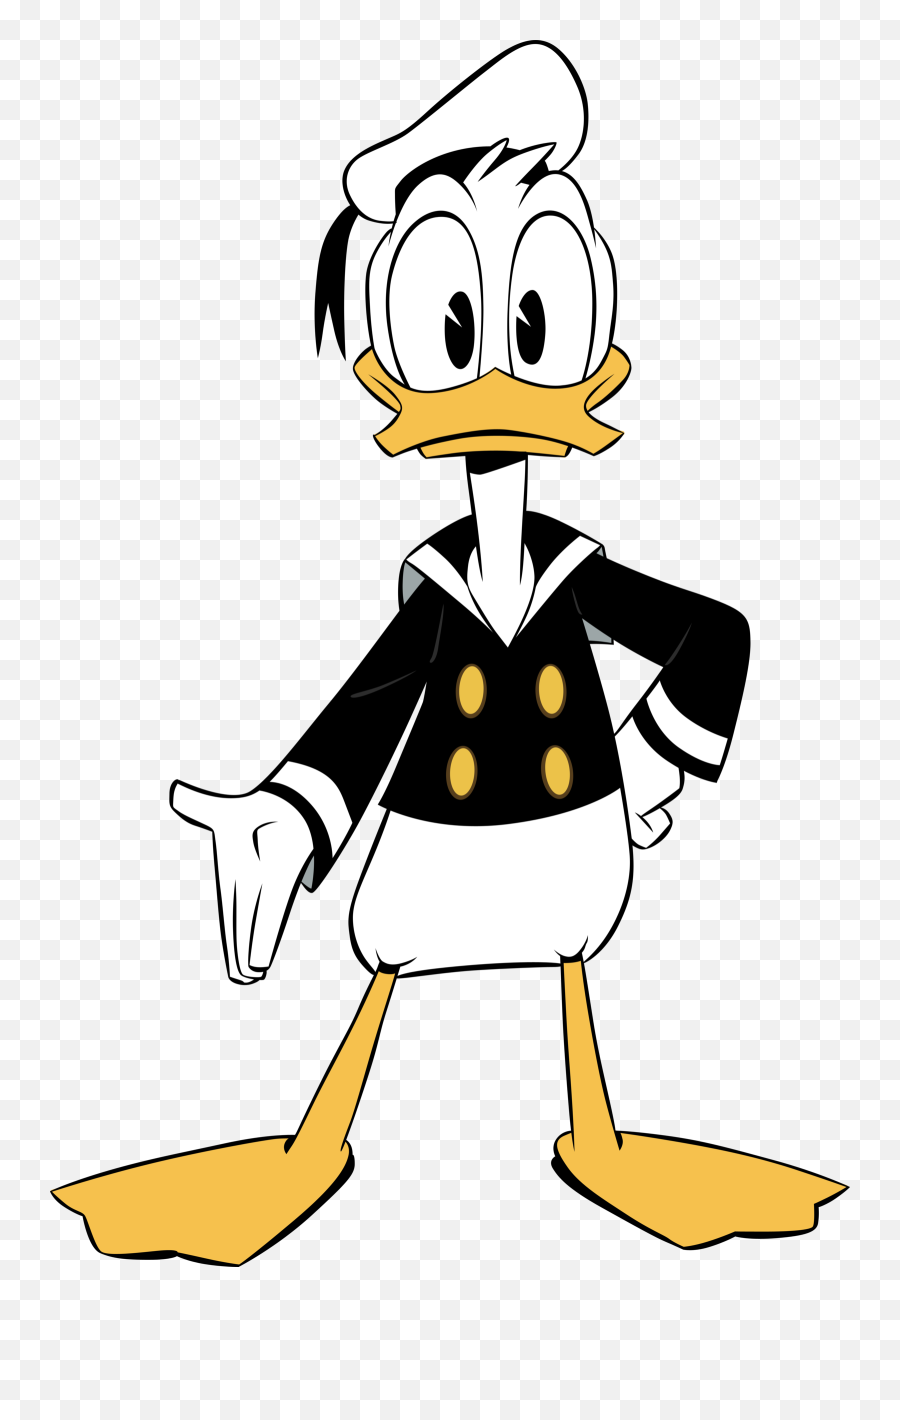 Donald Duck Band - Donald Duck From Ducktales Emoji,Donald Duck Emoji